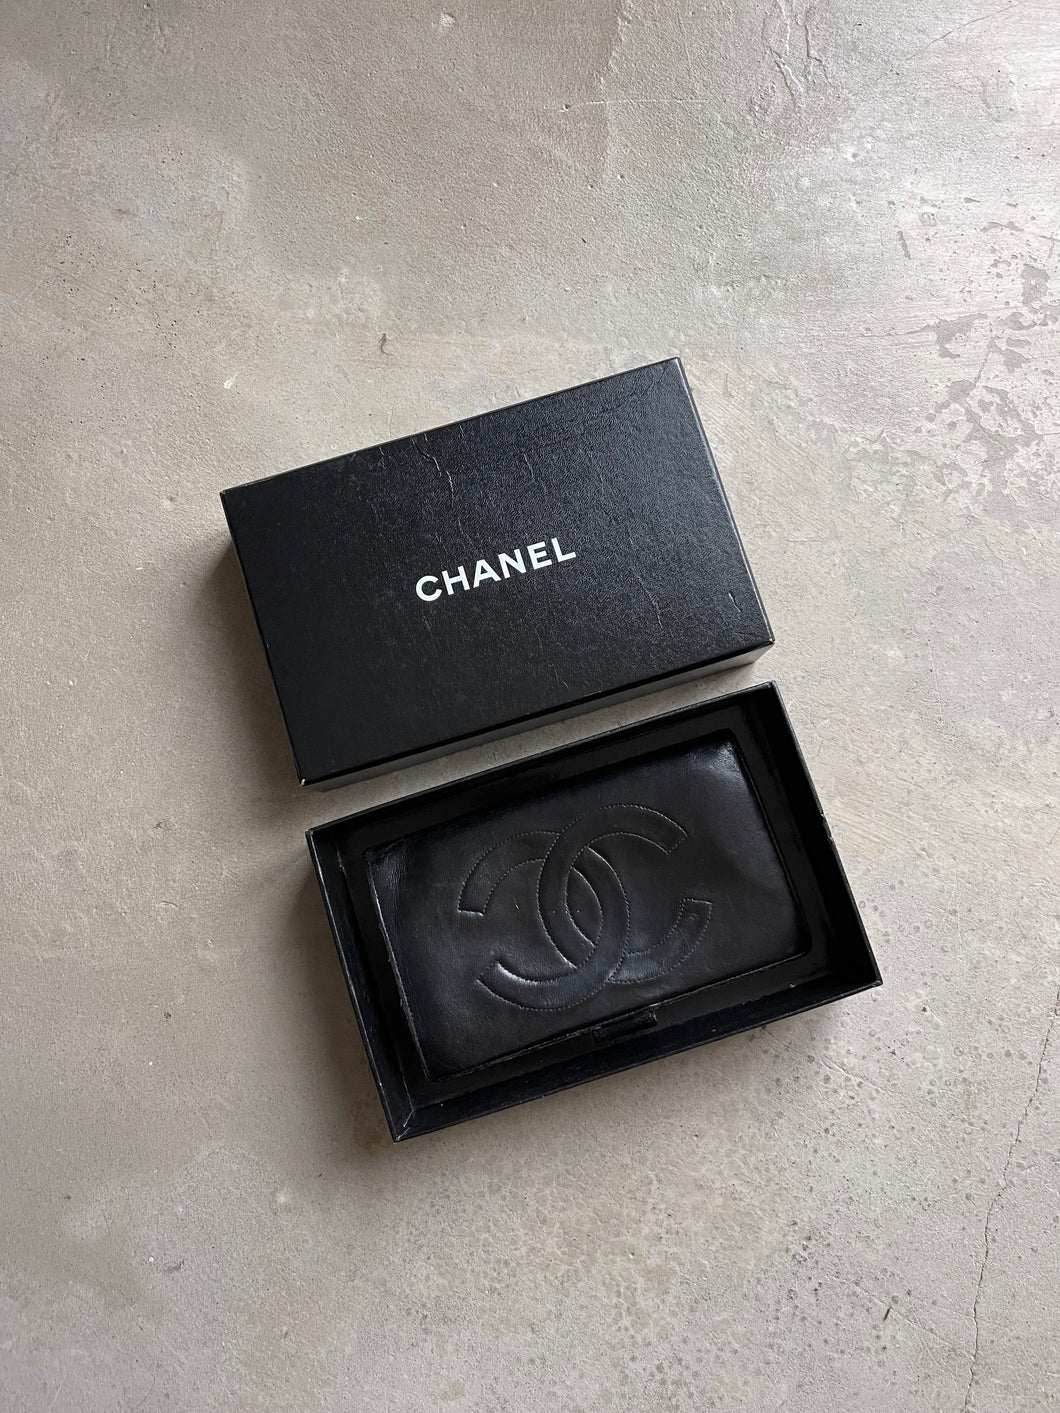 Chanel Vintage Leather Purse